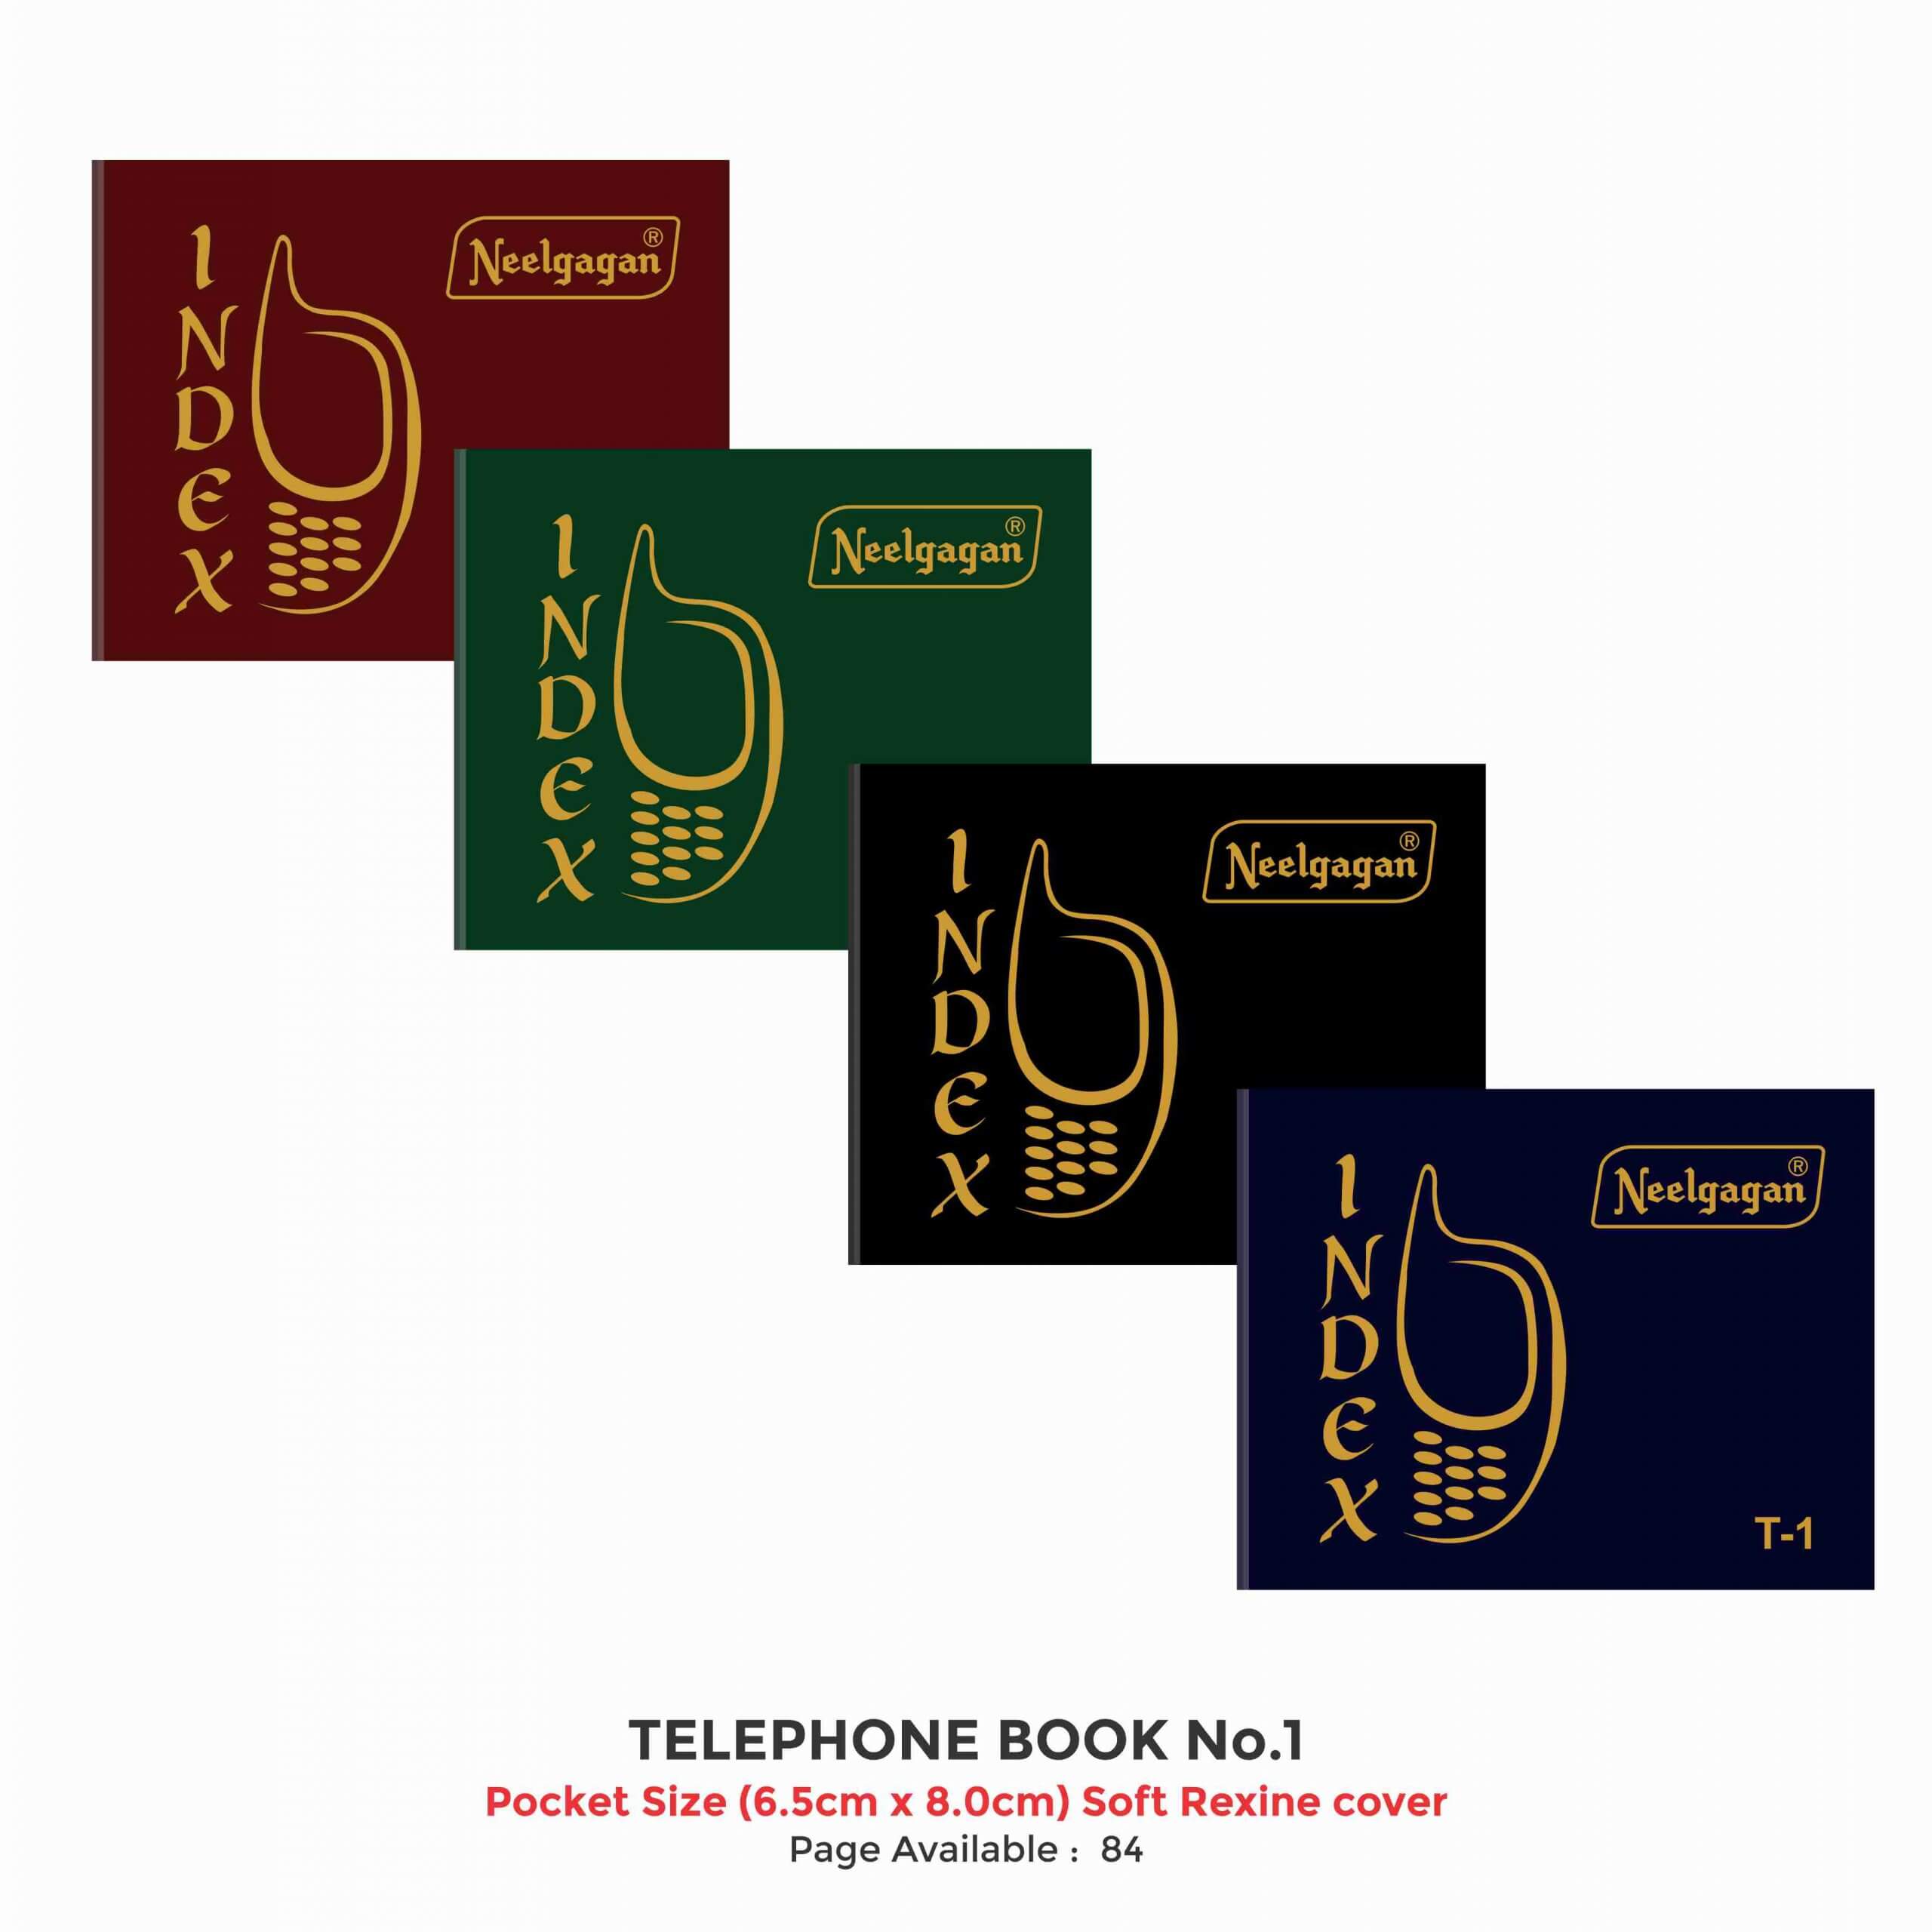 Telephone Book (Pocket Size), 84 pages, No.1, (6.5cm x 8.0cm) Soft Rexine cover